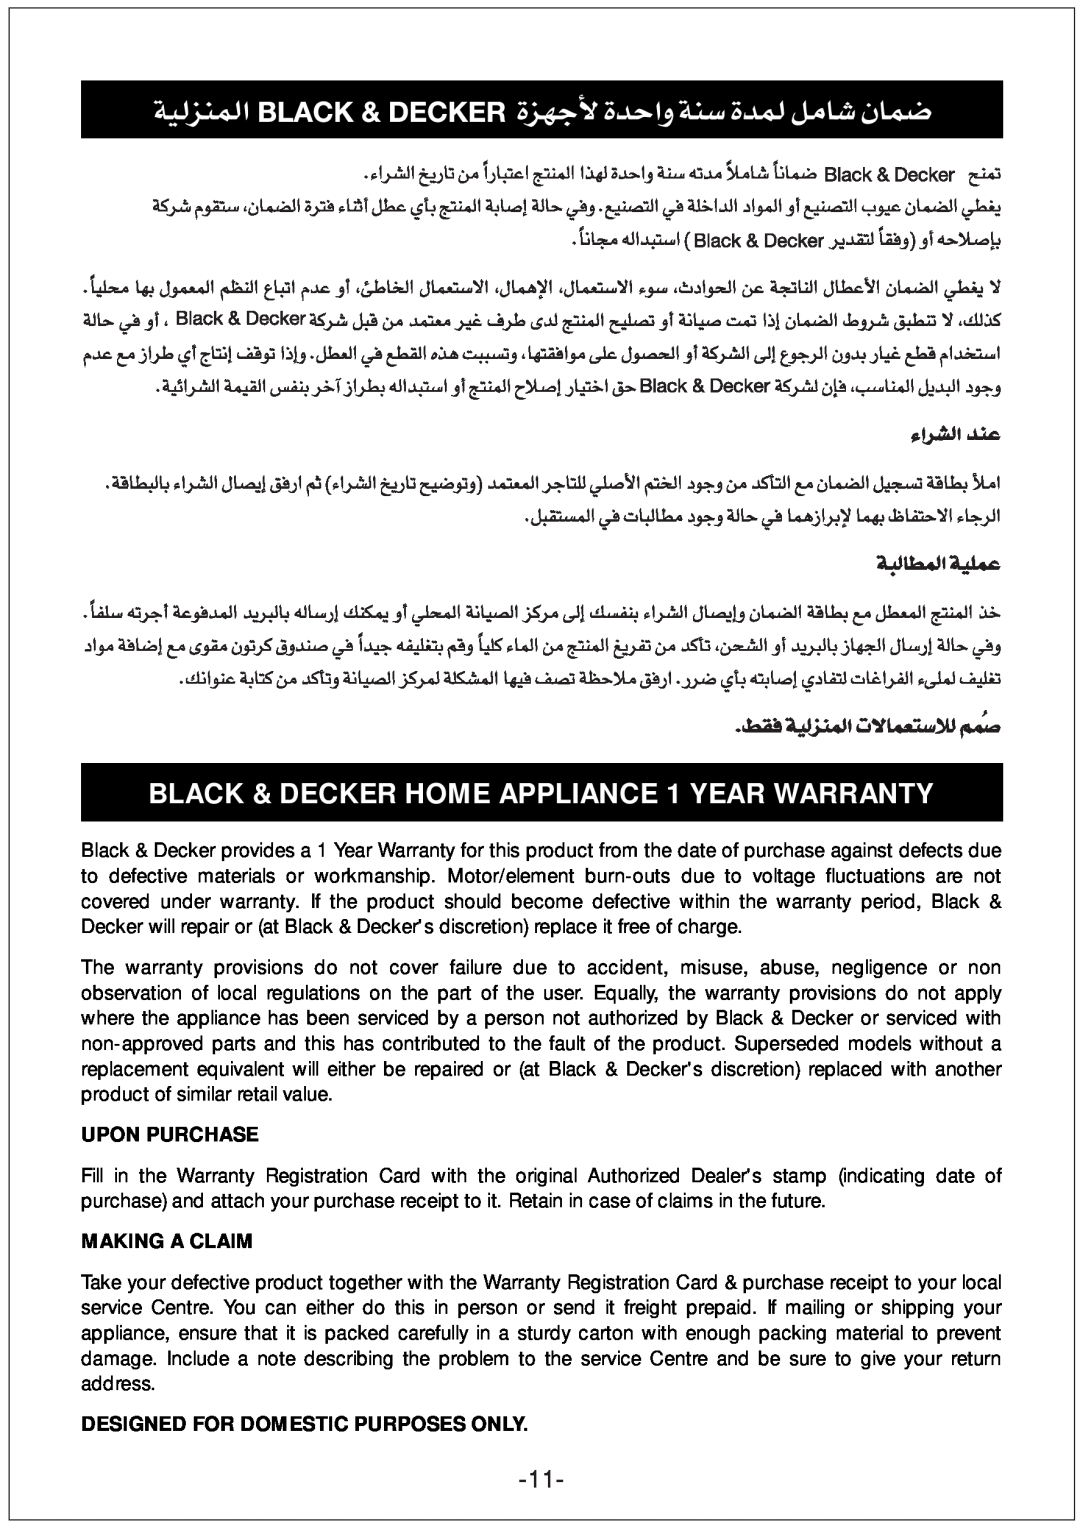 Black & Decker HX325 manual BLACK & DECKER HOME APPLIANCE 1 YEAR WARRANTY, Upon Purchase, Making A Claim 